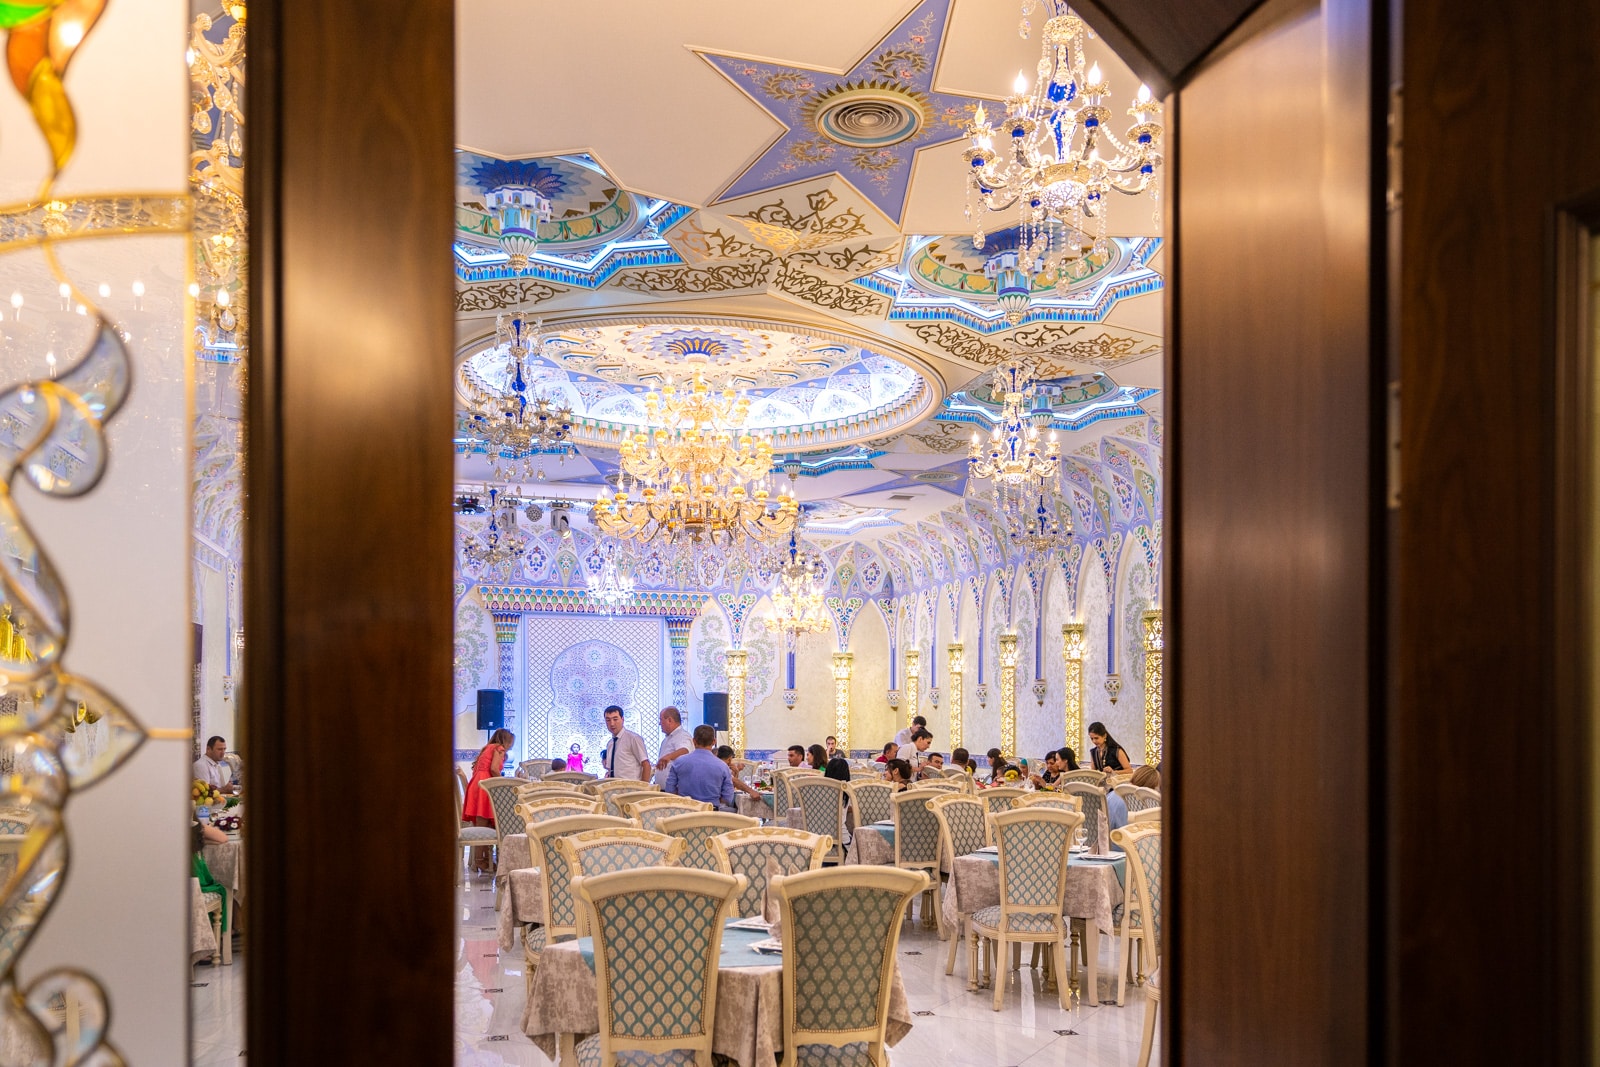 Interior dining room of Sim Sim restaurant in Tashkent, Uzbekistan